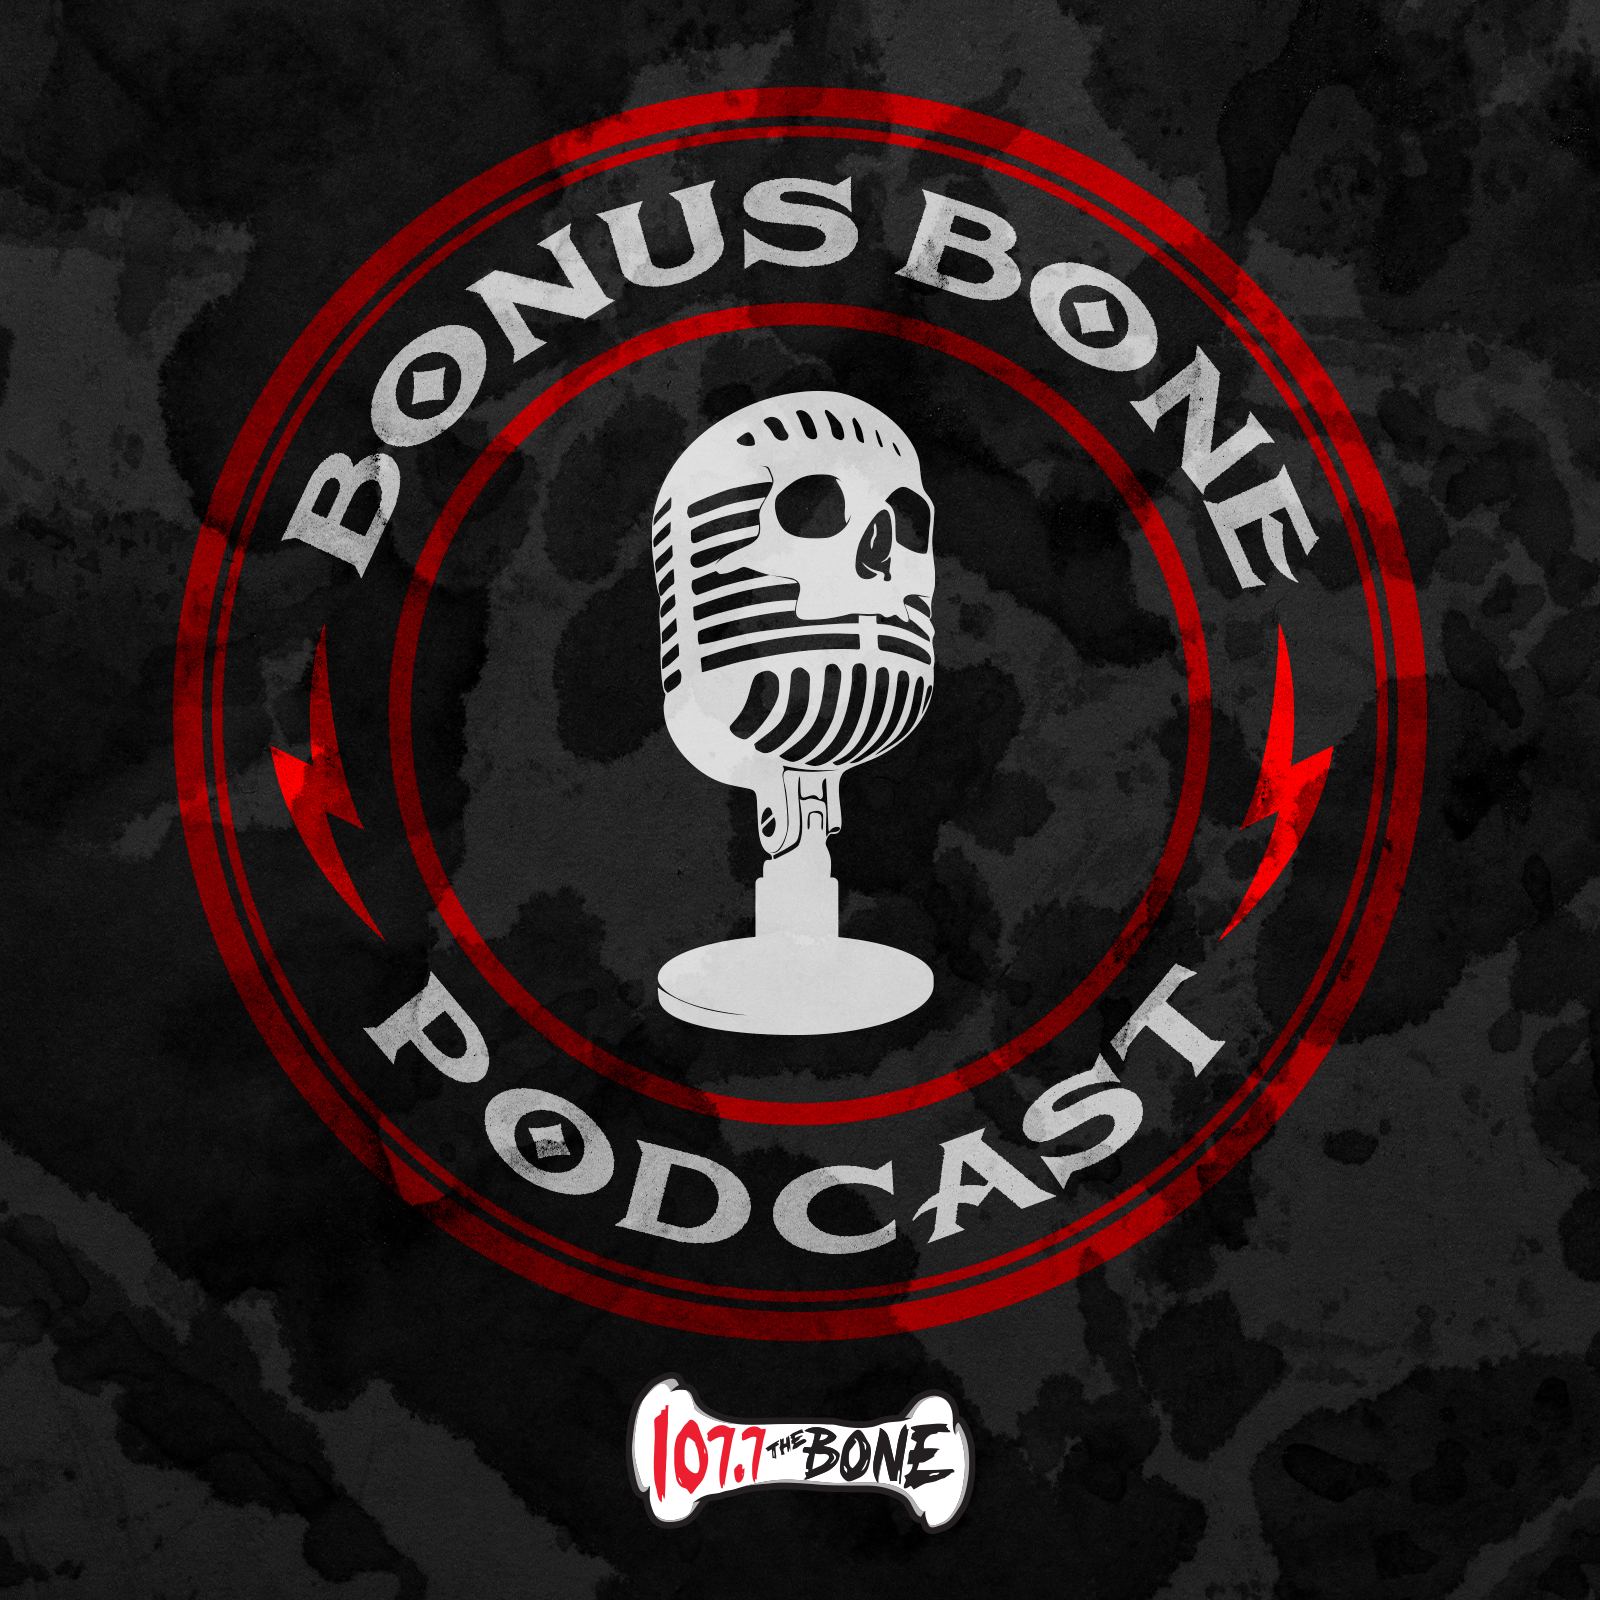 The Bonus Bone: What Food Items Do You Hate To Eat?